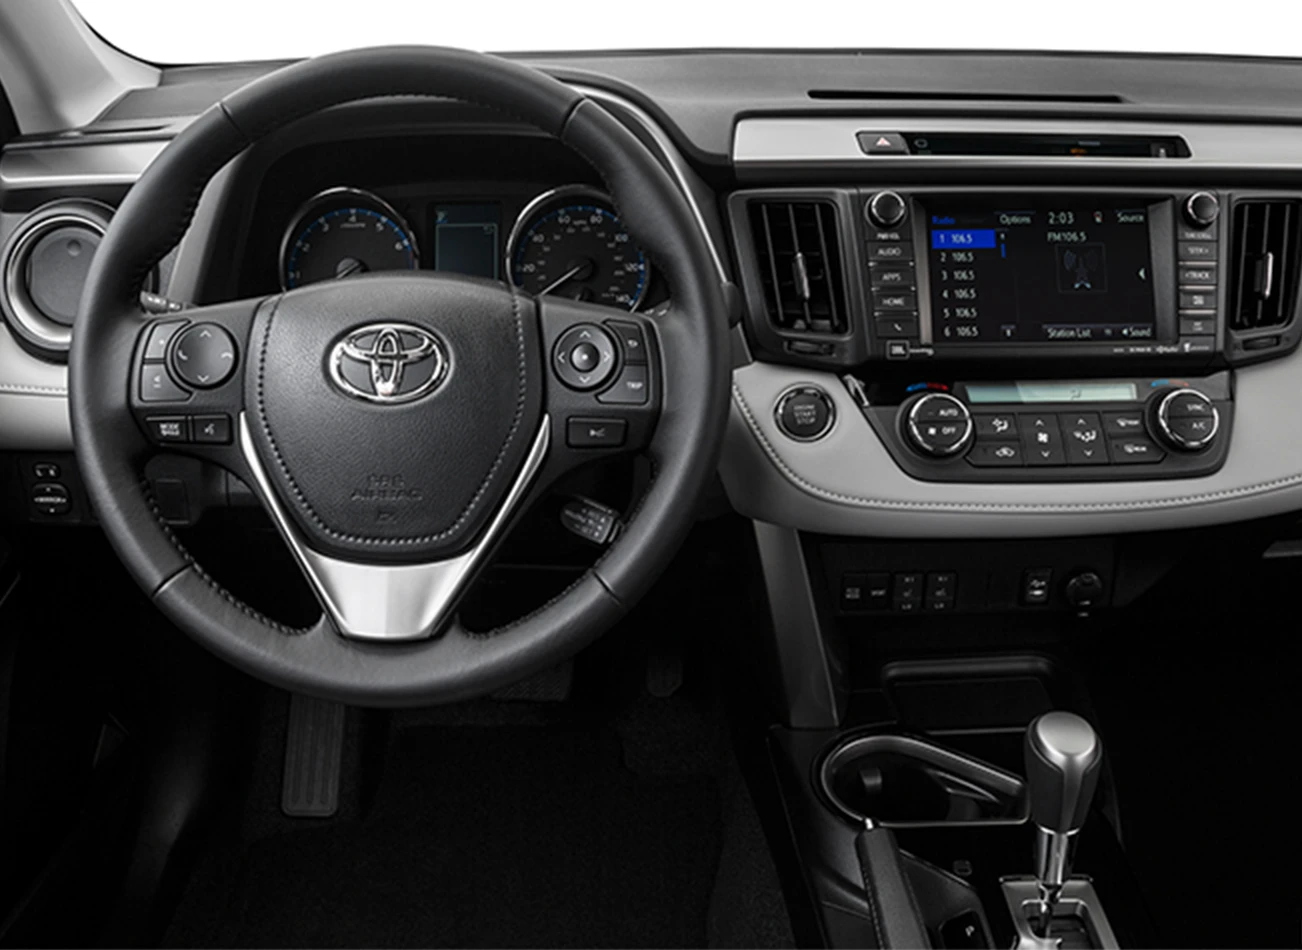 2018 Toyota RAV4: Reviews, Photos, and More: Reasons to Buy #4 | CarMax